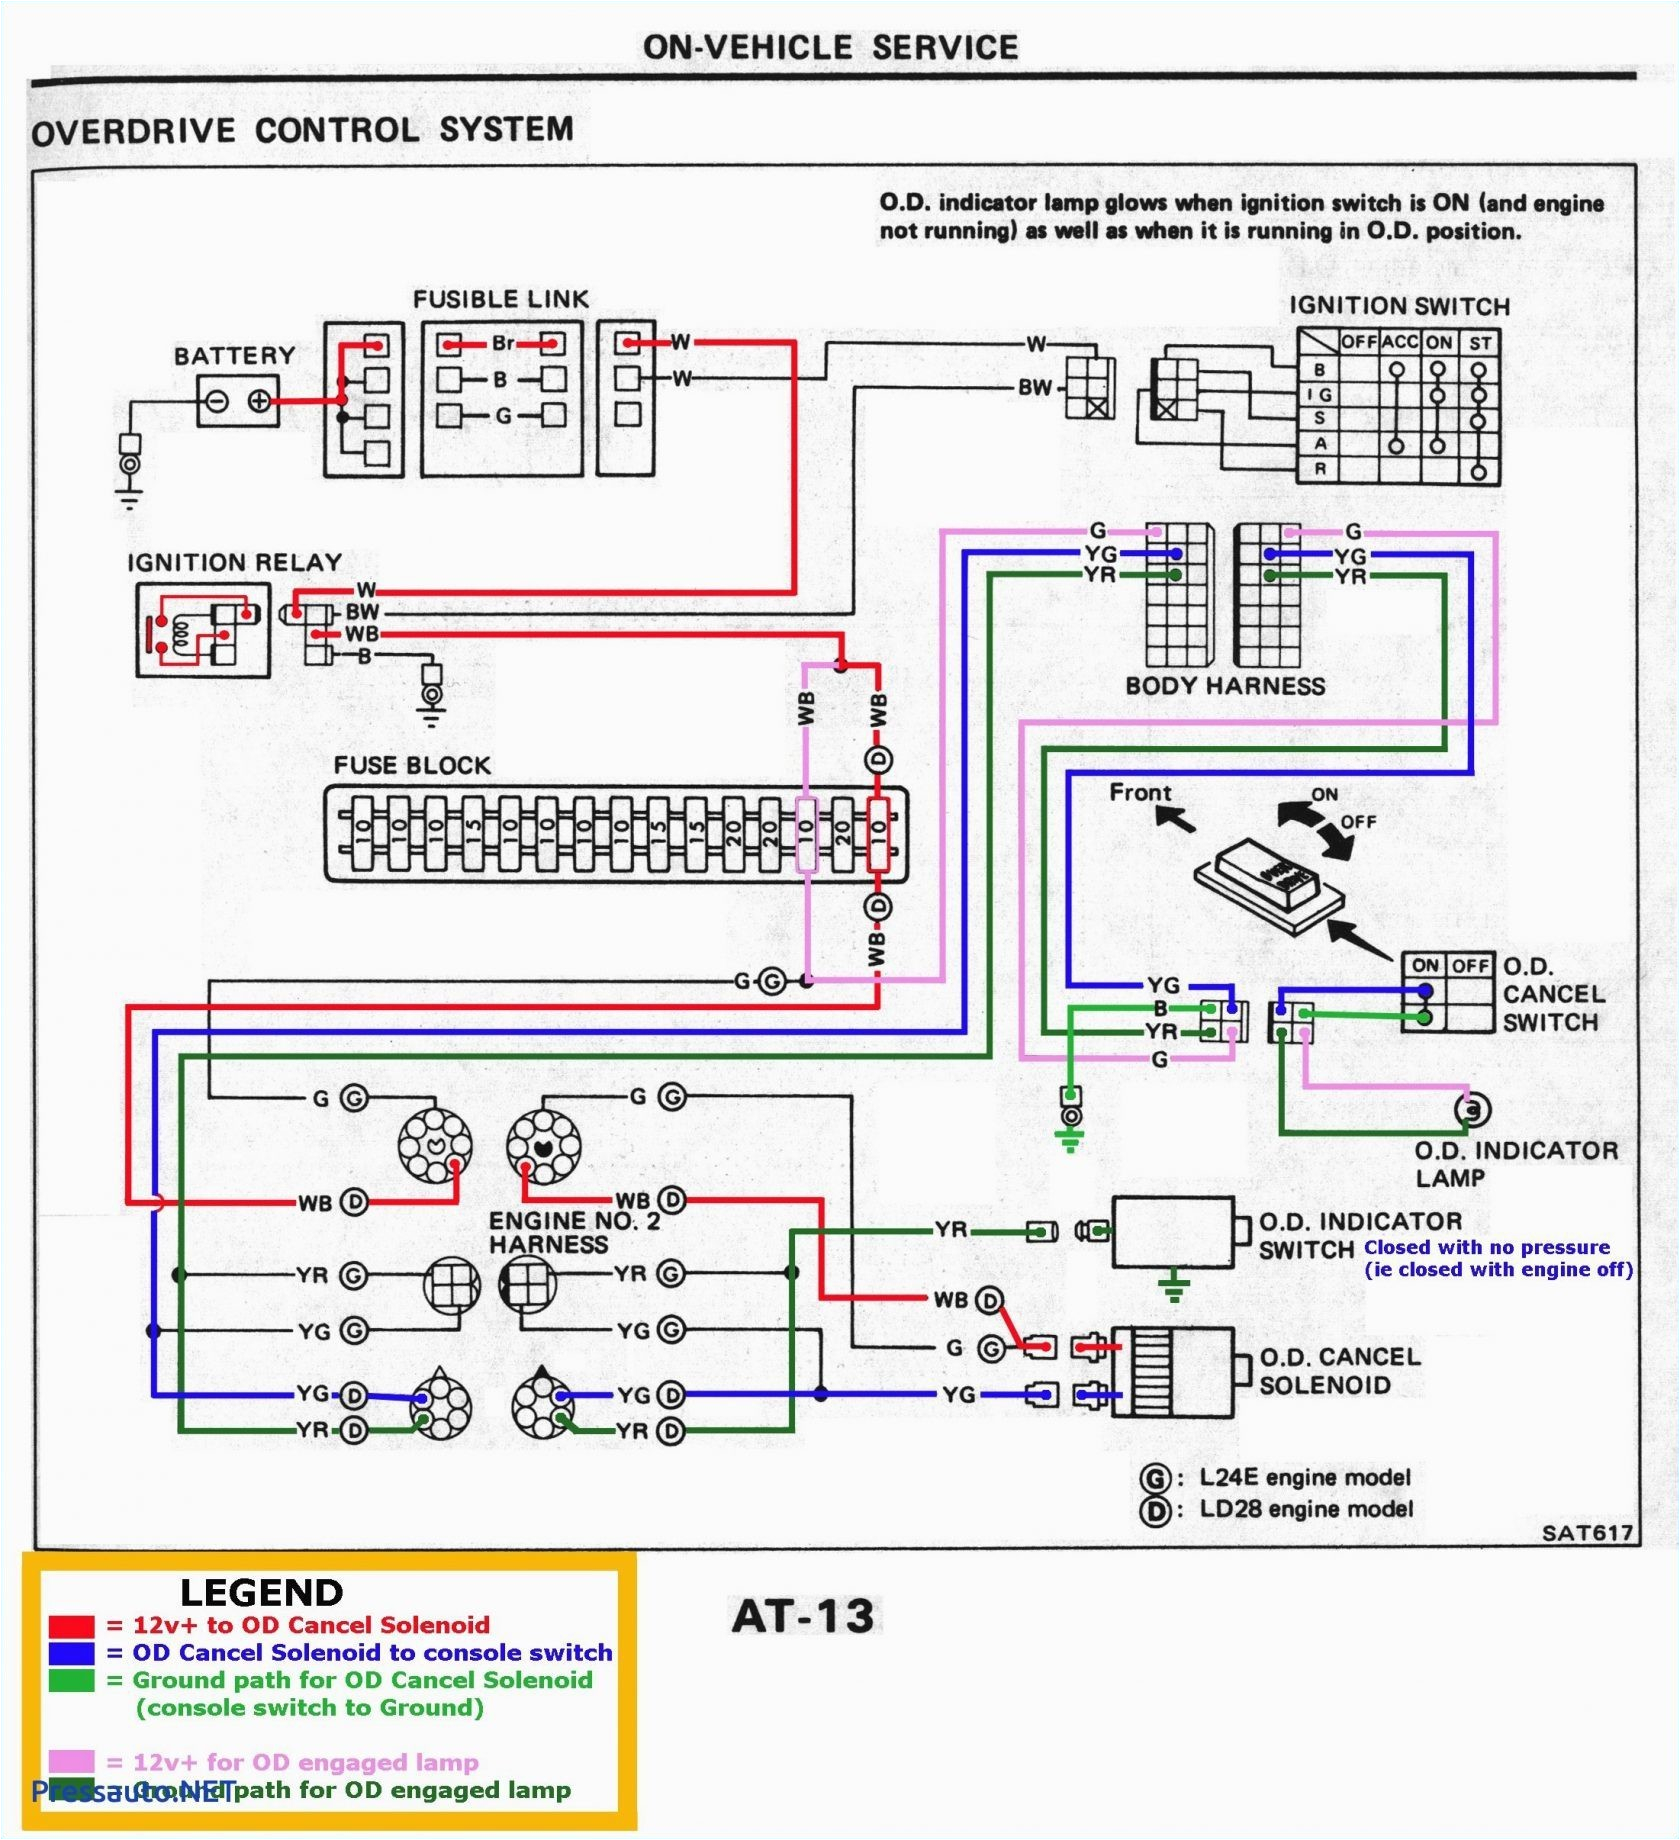 12v hydraulic solenoid valve wiring diagram wiring diagram expert 12v hydraulic solenoid valve wiring diagram